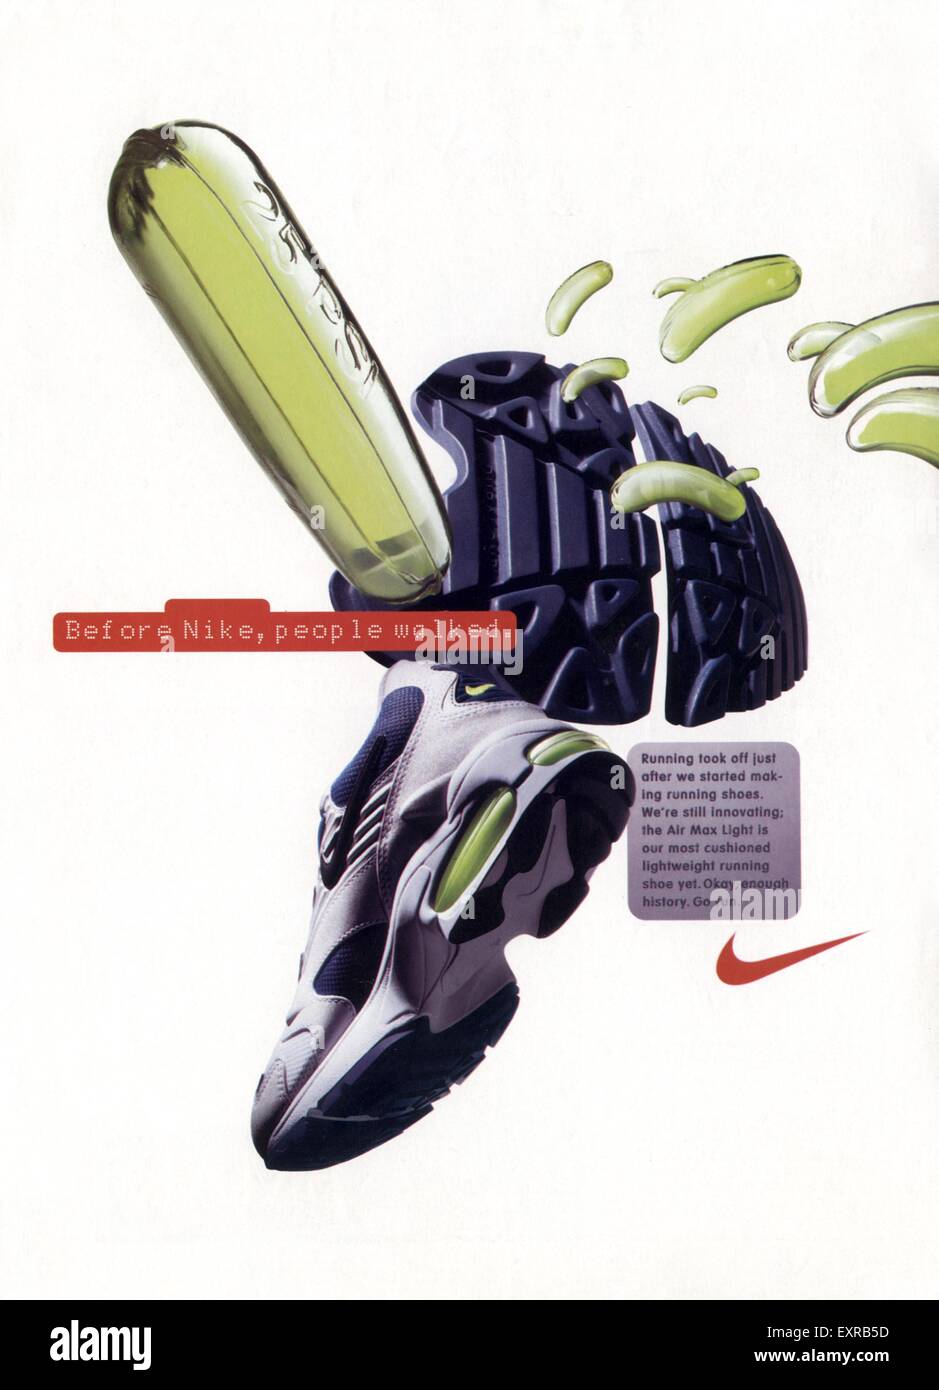 1990s UK Nike Magazine Advert Stock Photo - Alamy